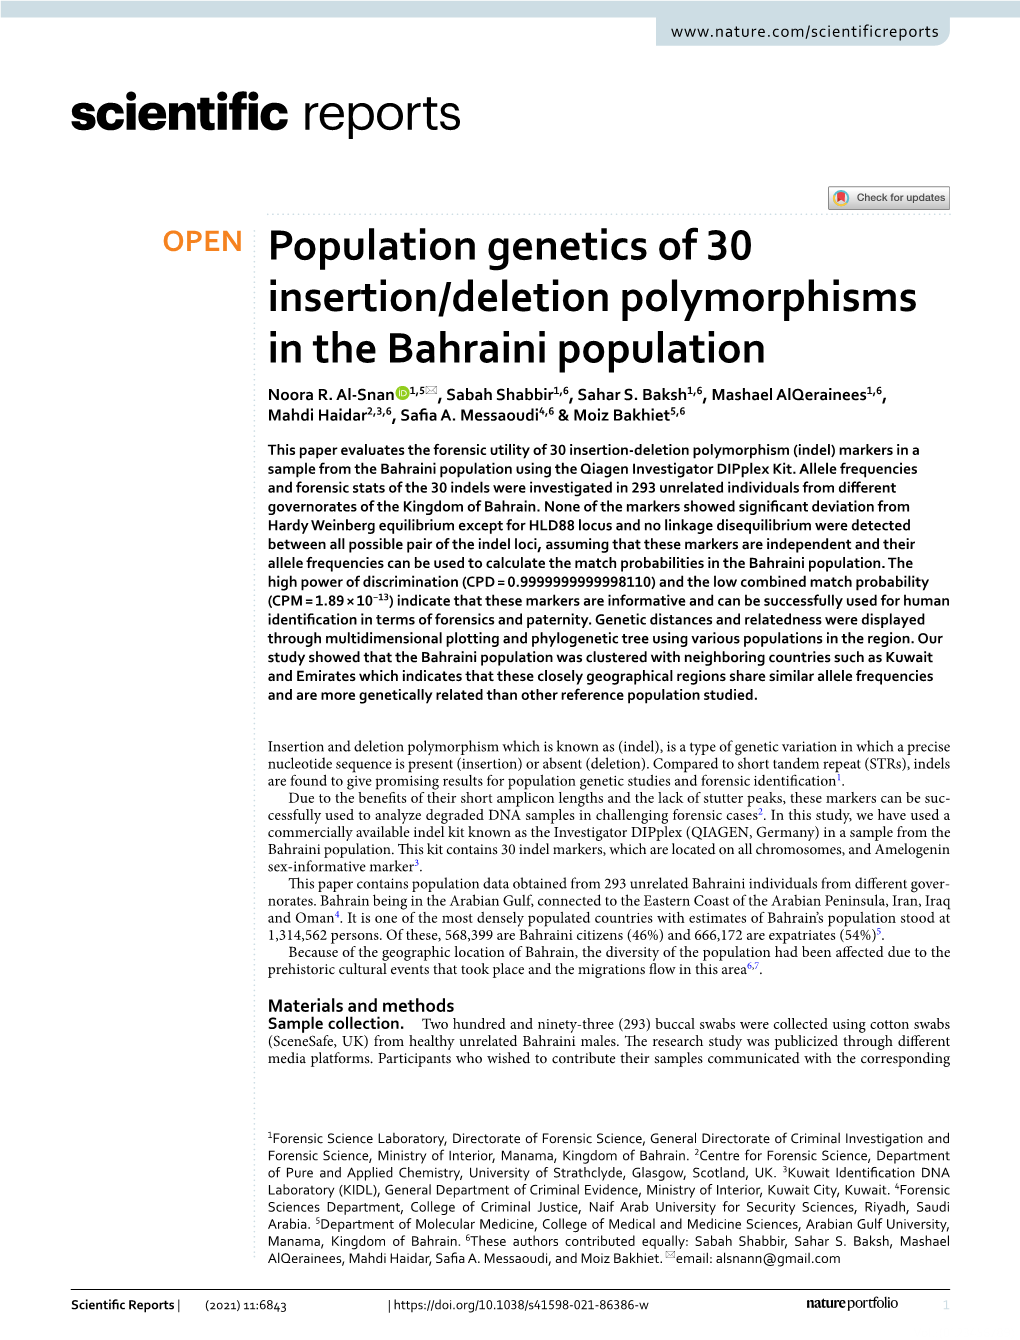 Population Genetics of 30 Insertion/Deletion Polymorphisms in the Bahraini Population Noora R